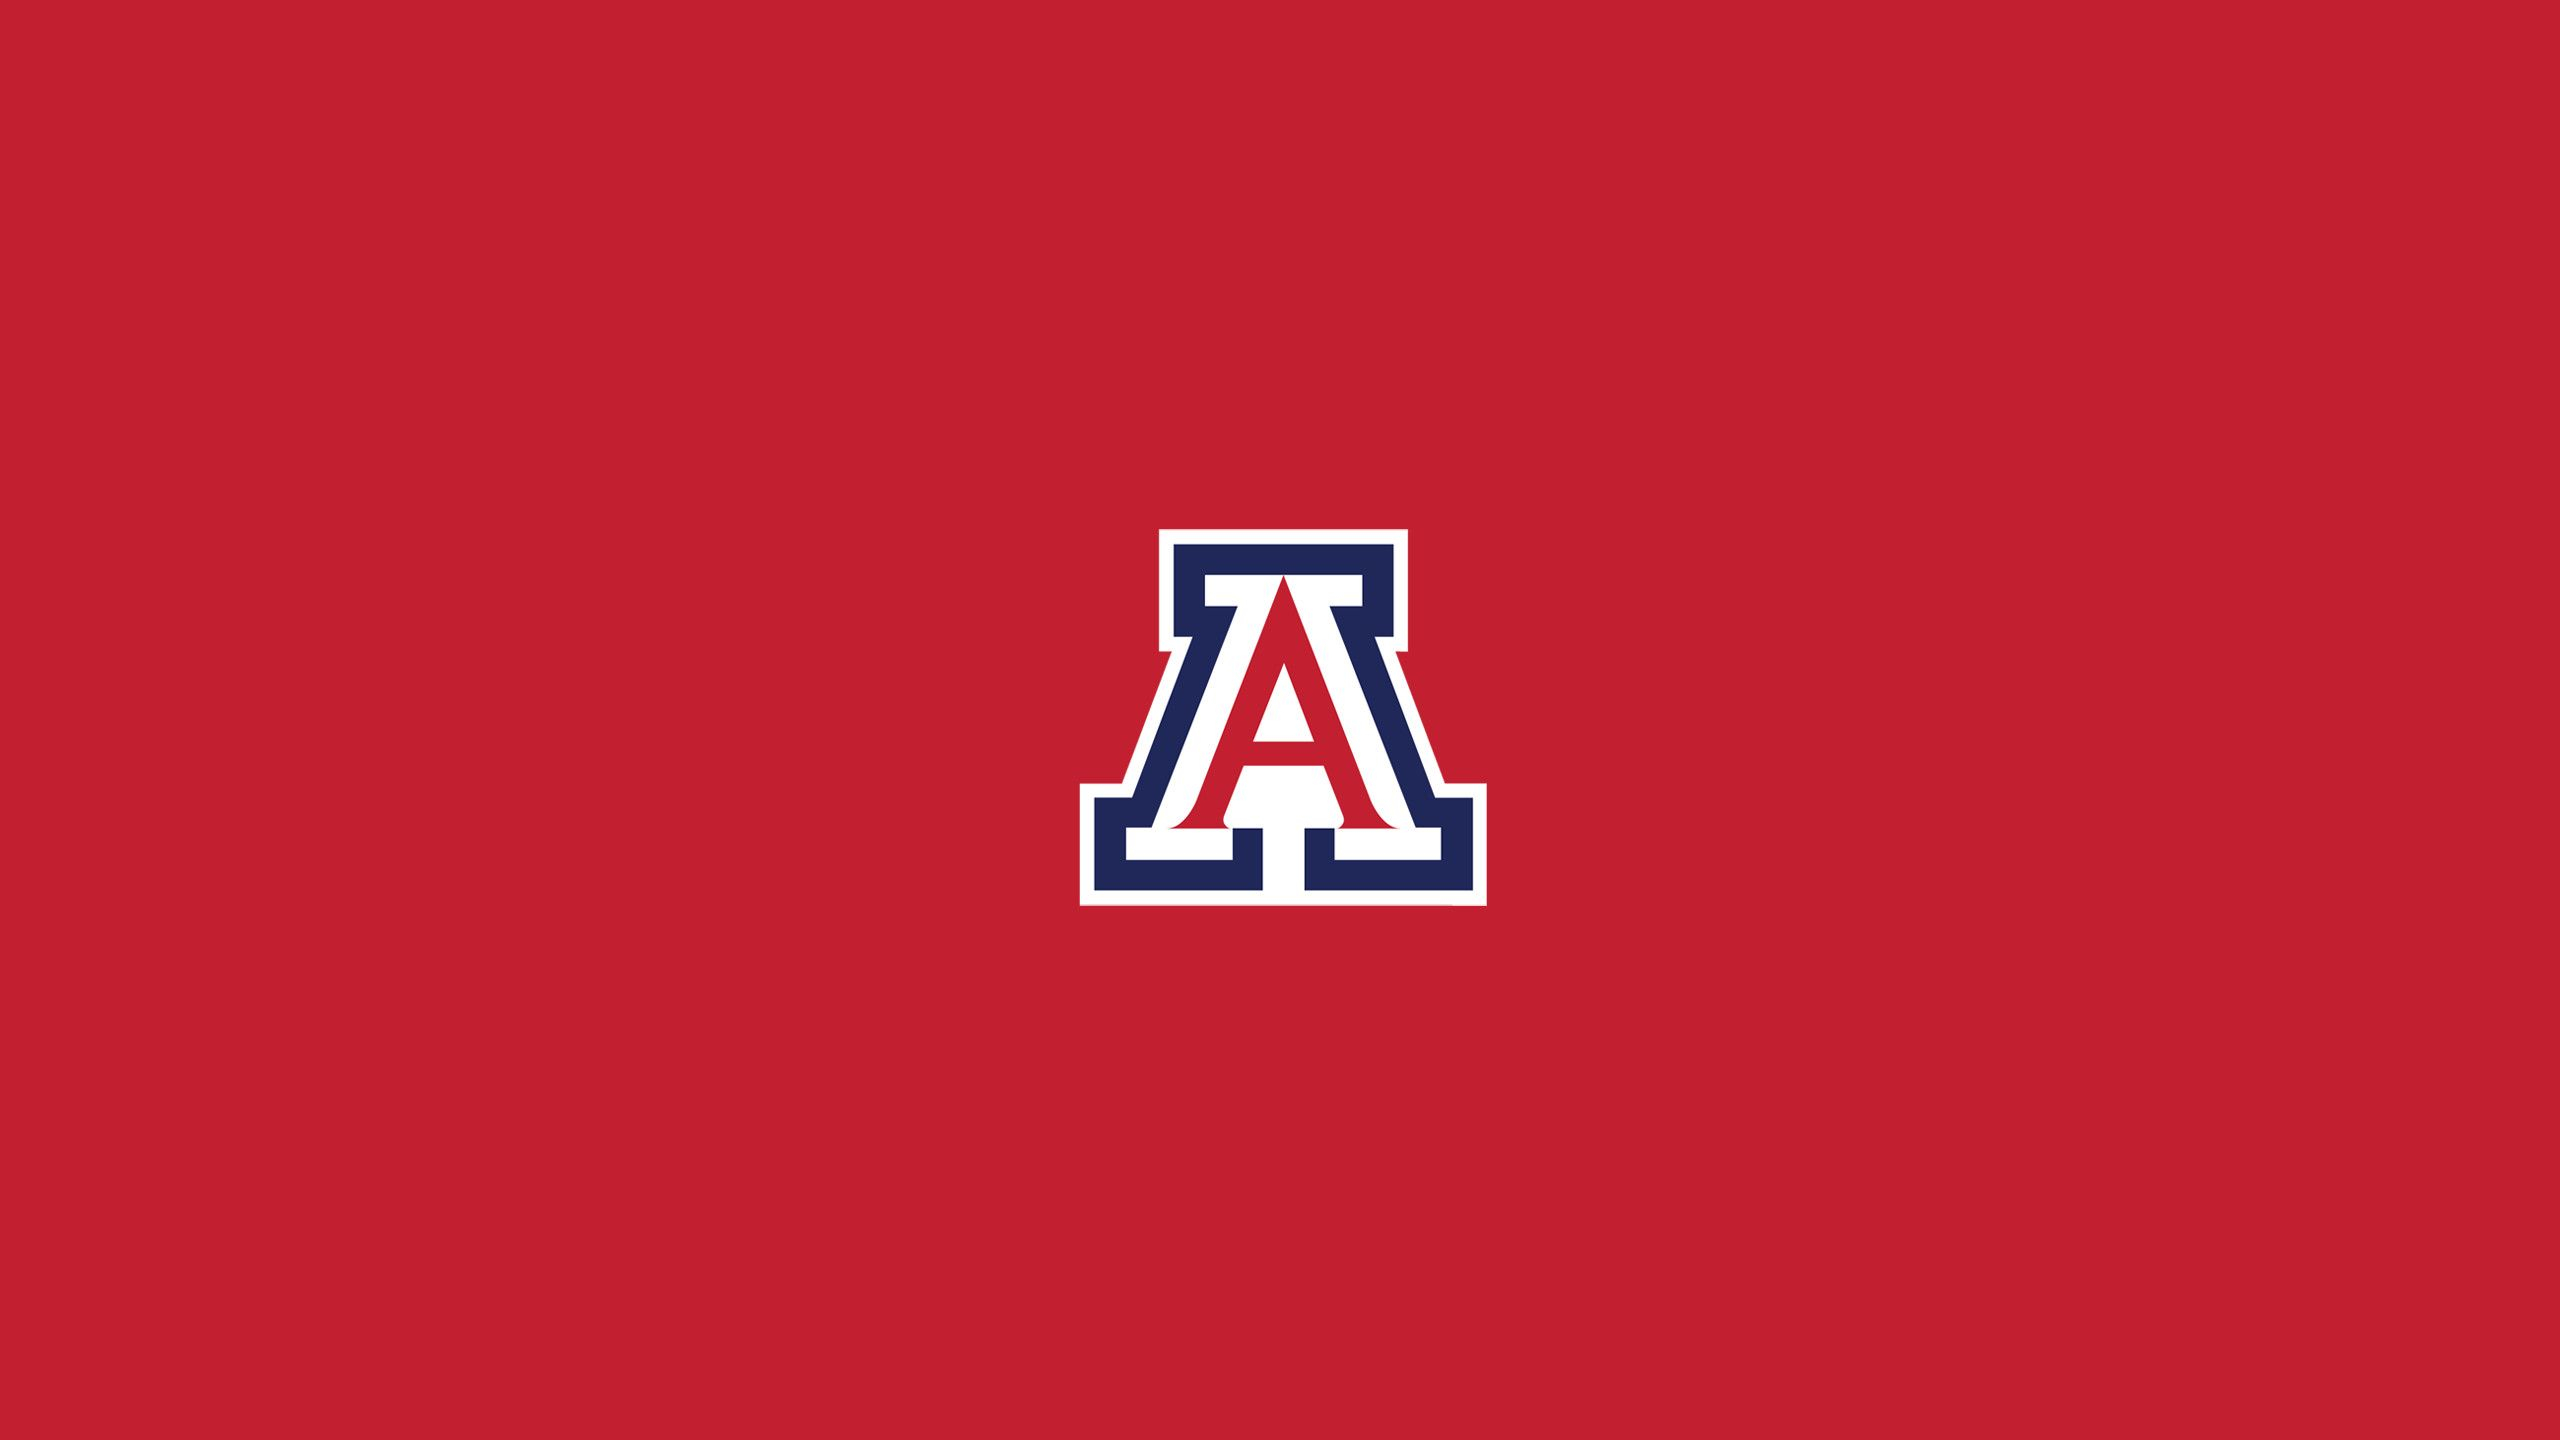 2560x1440 University of Arizona Logo Wallpapers Top Free University of Arizona Logo Backgrounds